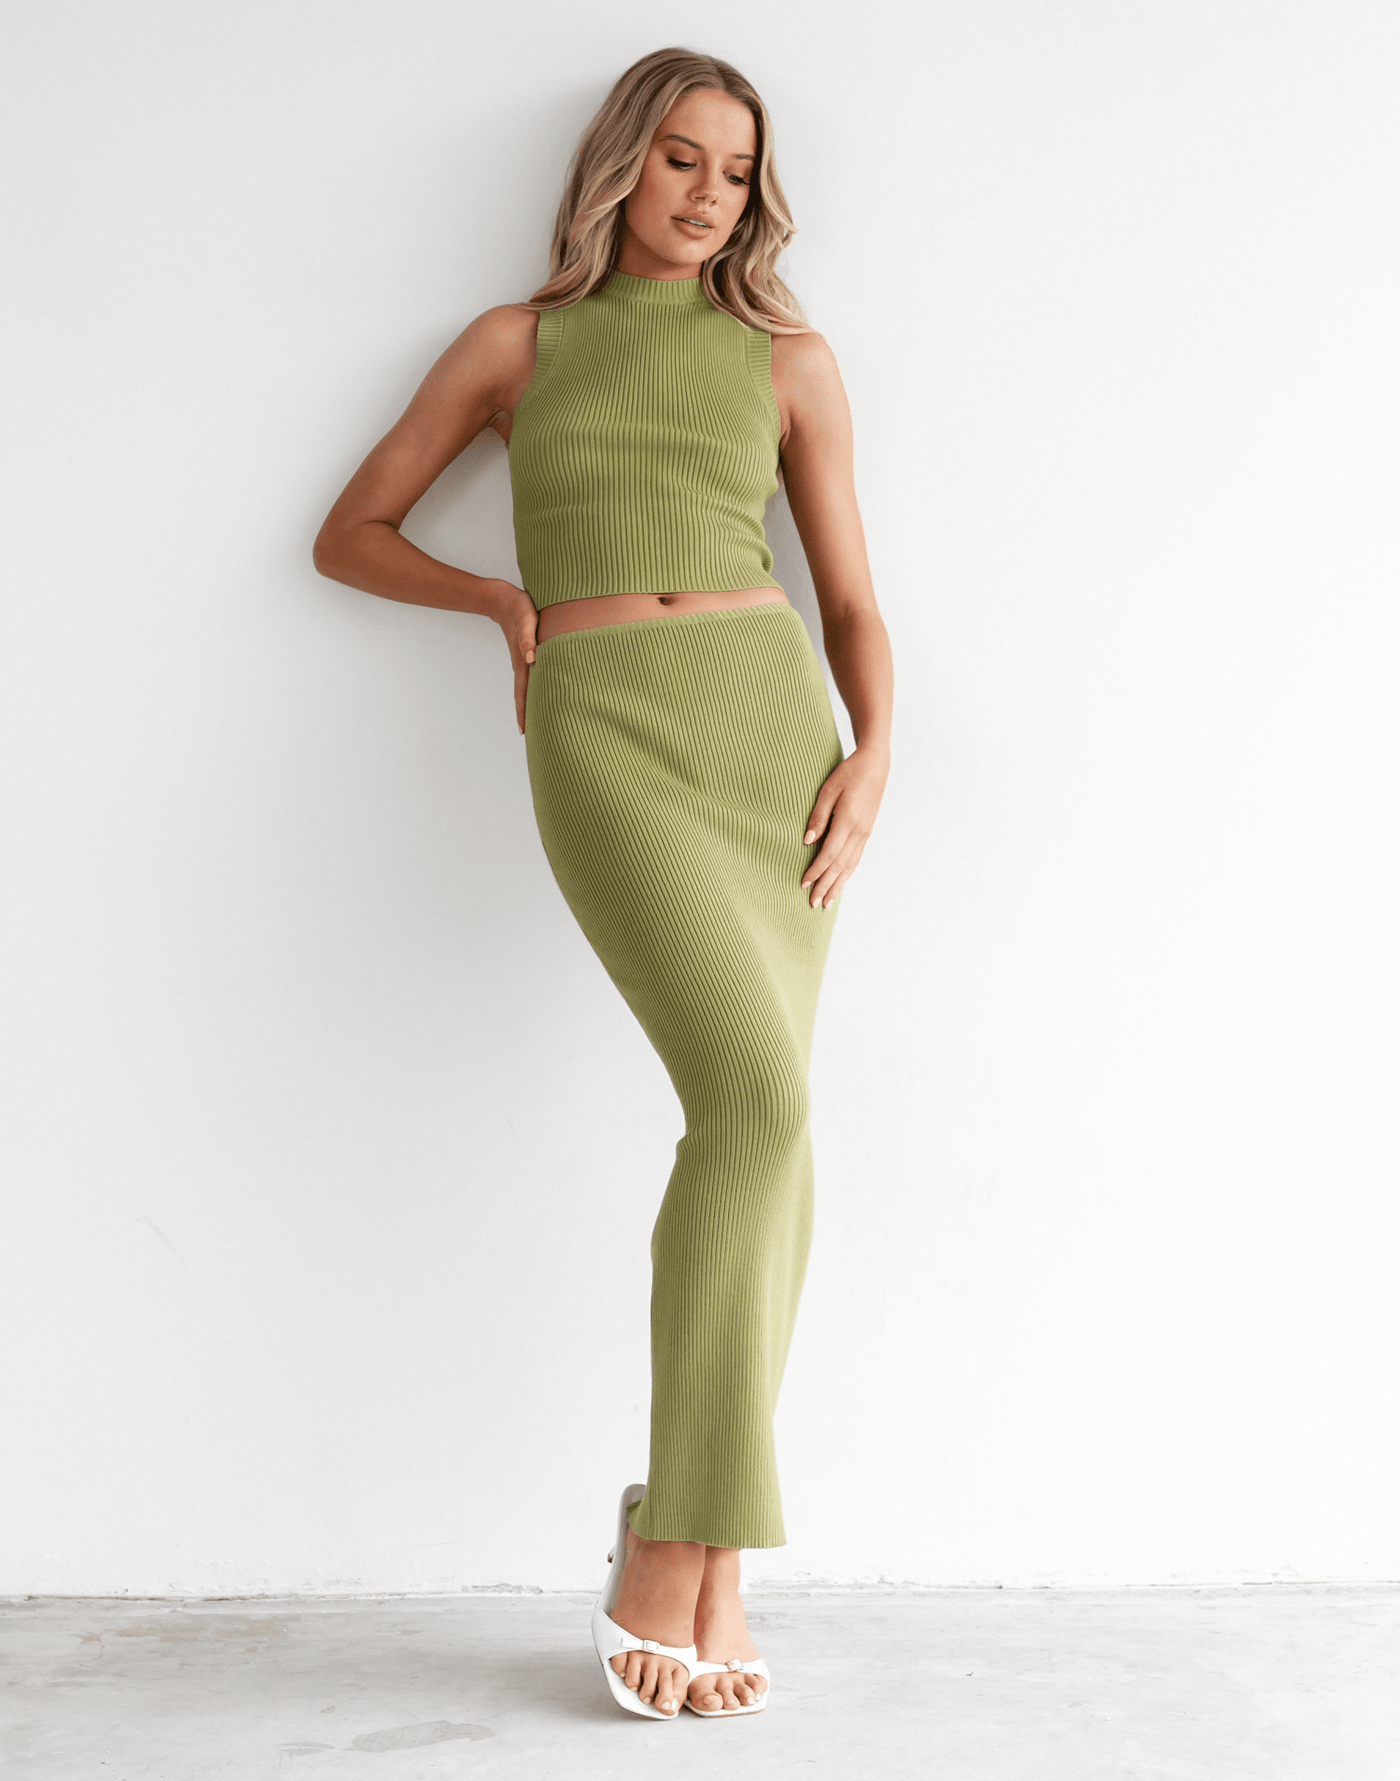 Nate Knit Maxi Skirt (Green) - Knitted Maxi Skirt - Women's Skirt - Charcoal Clothing